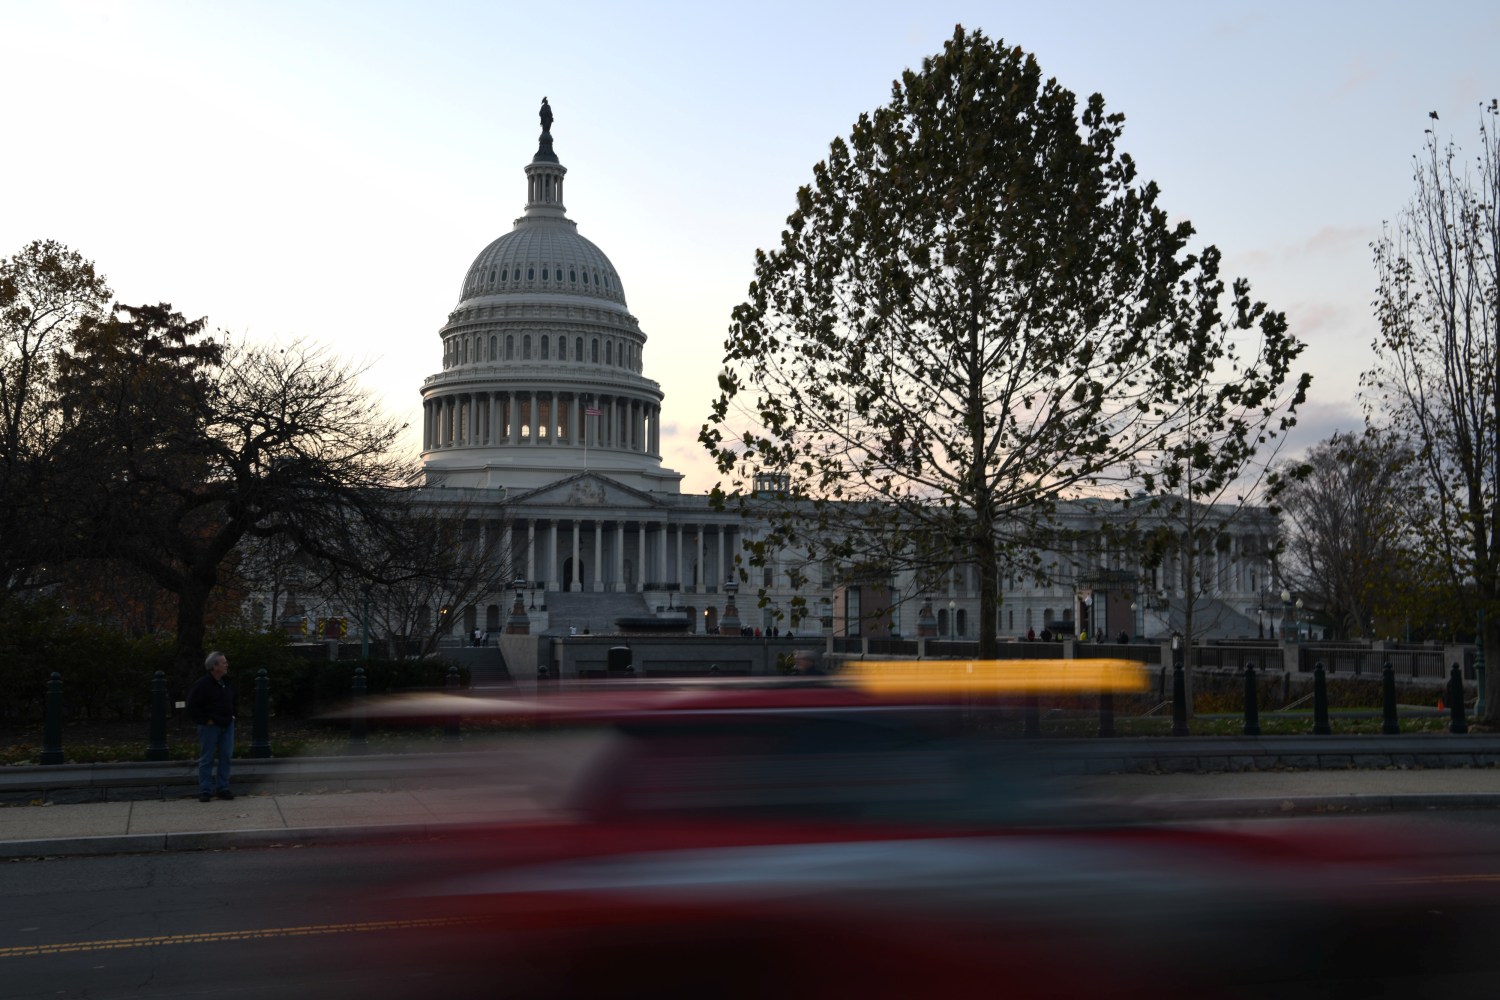 The U.S. Capitol building is pictured on Capitol Hill in Washington, U.S., November 27, 2019. REUTERS/Loren Elliott - RC2ZJD9XHAGW